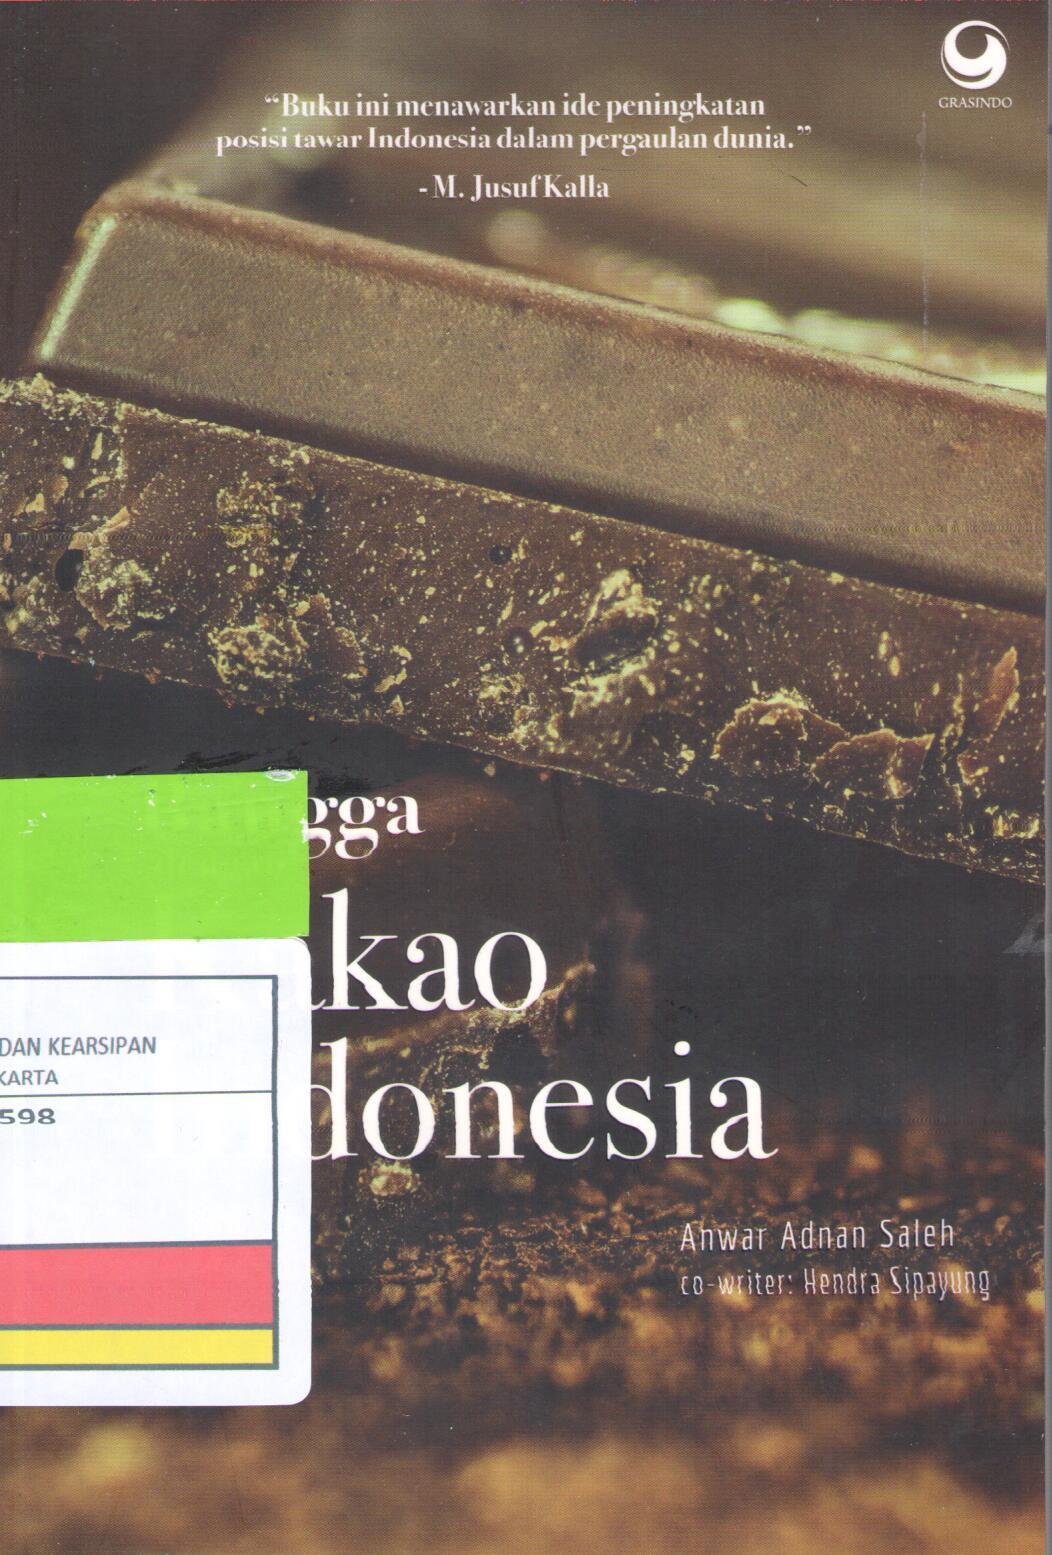 Bangga Dengan Kakao Indonesia